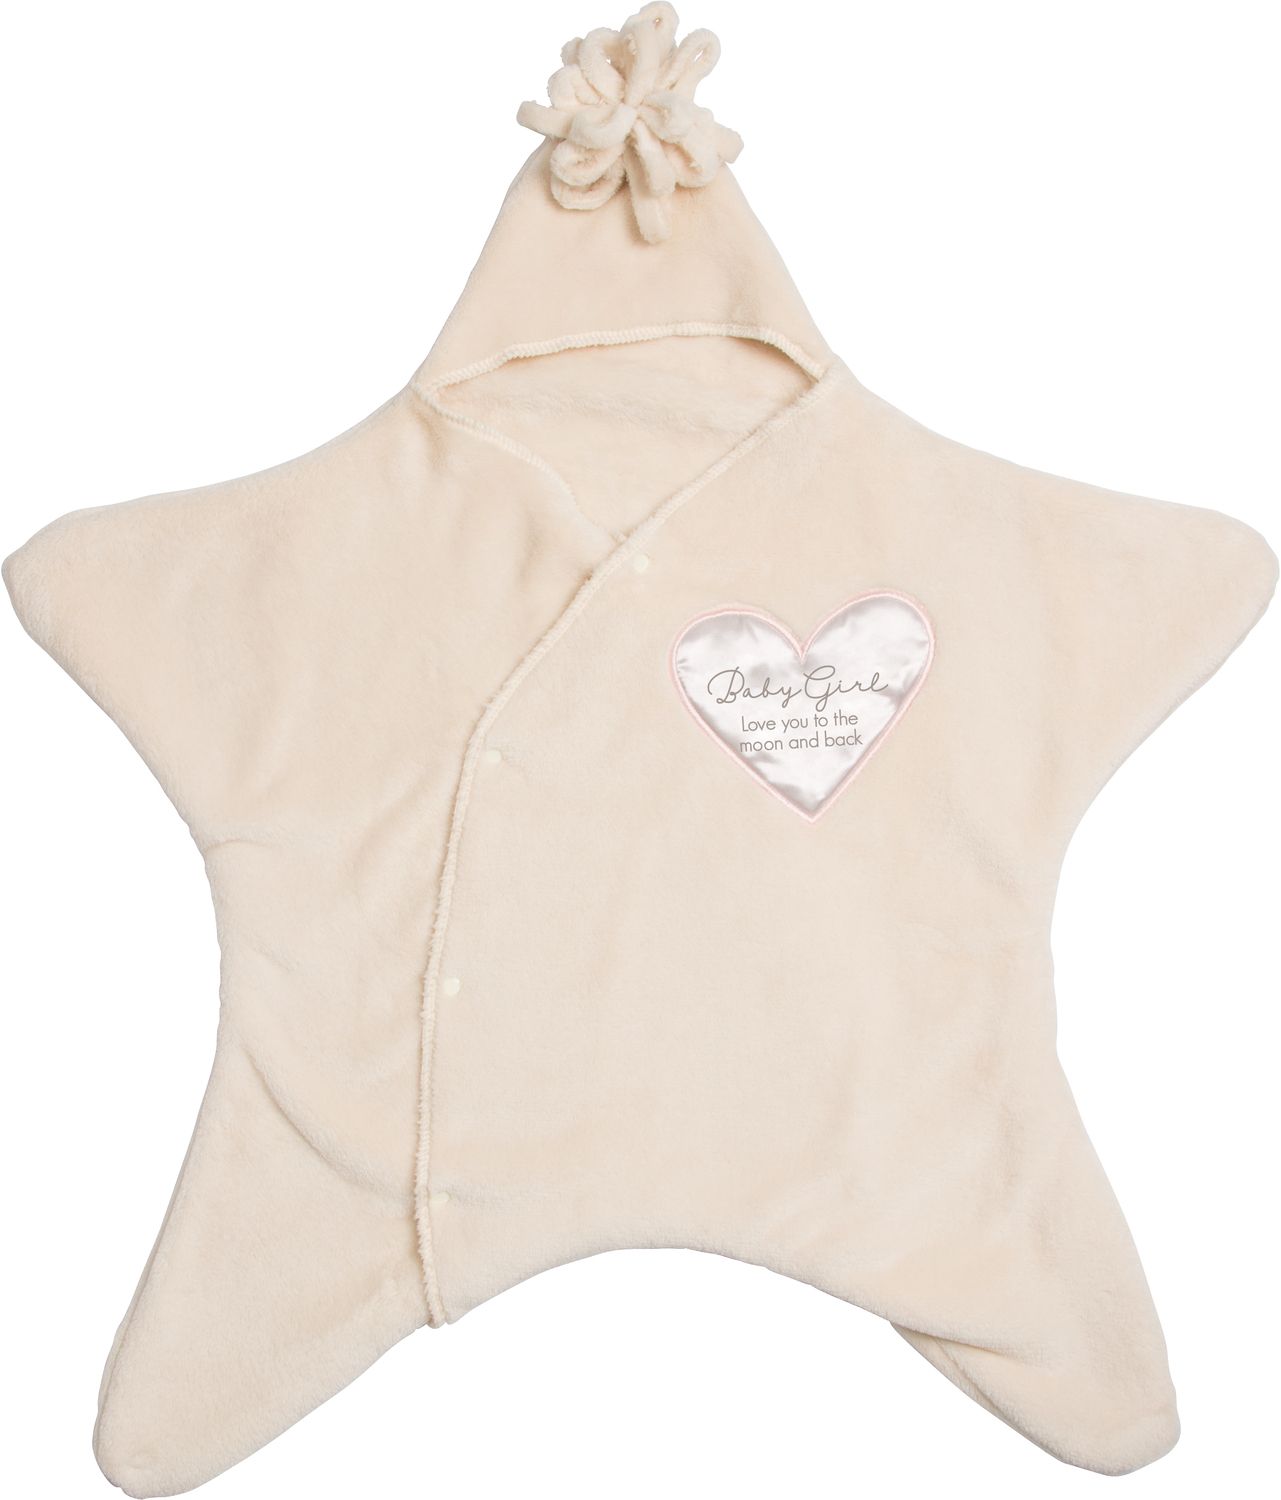 Baby Girl Star by Comfort Blanket - Baby Girl Star - 26" x 28" Star Comfort Snuggler